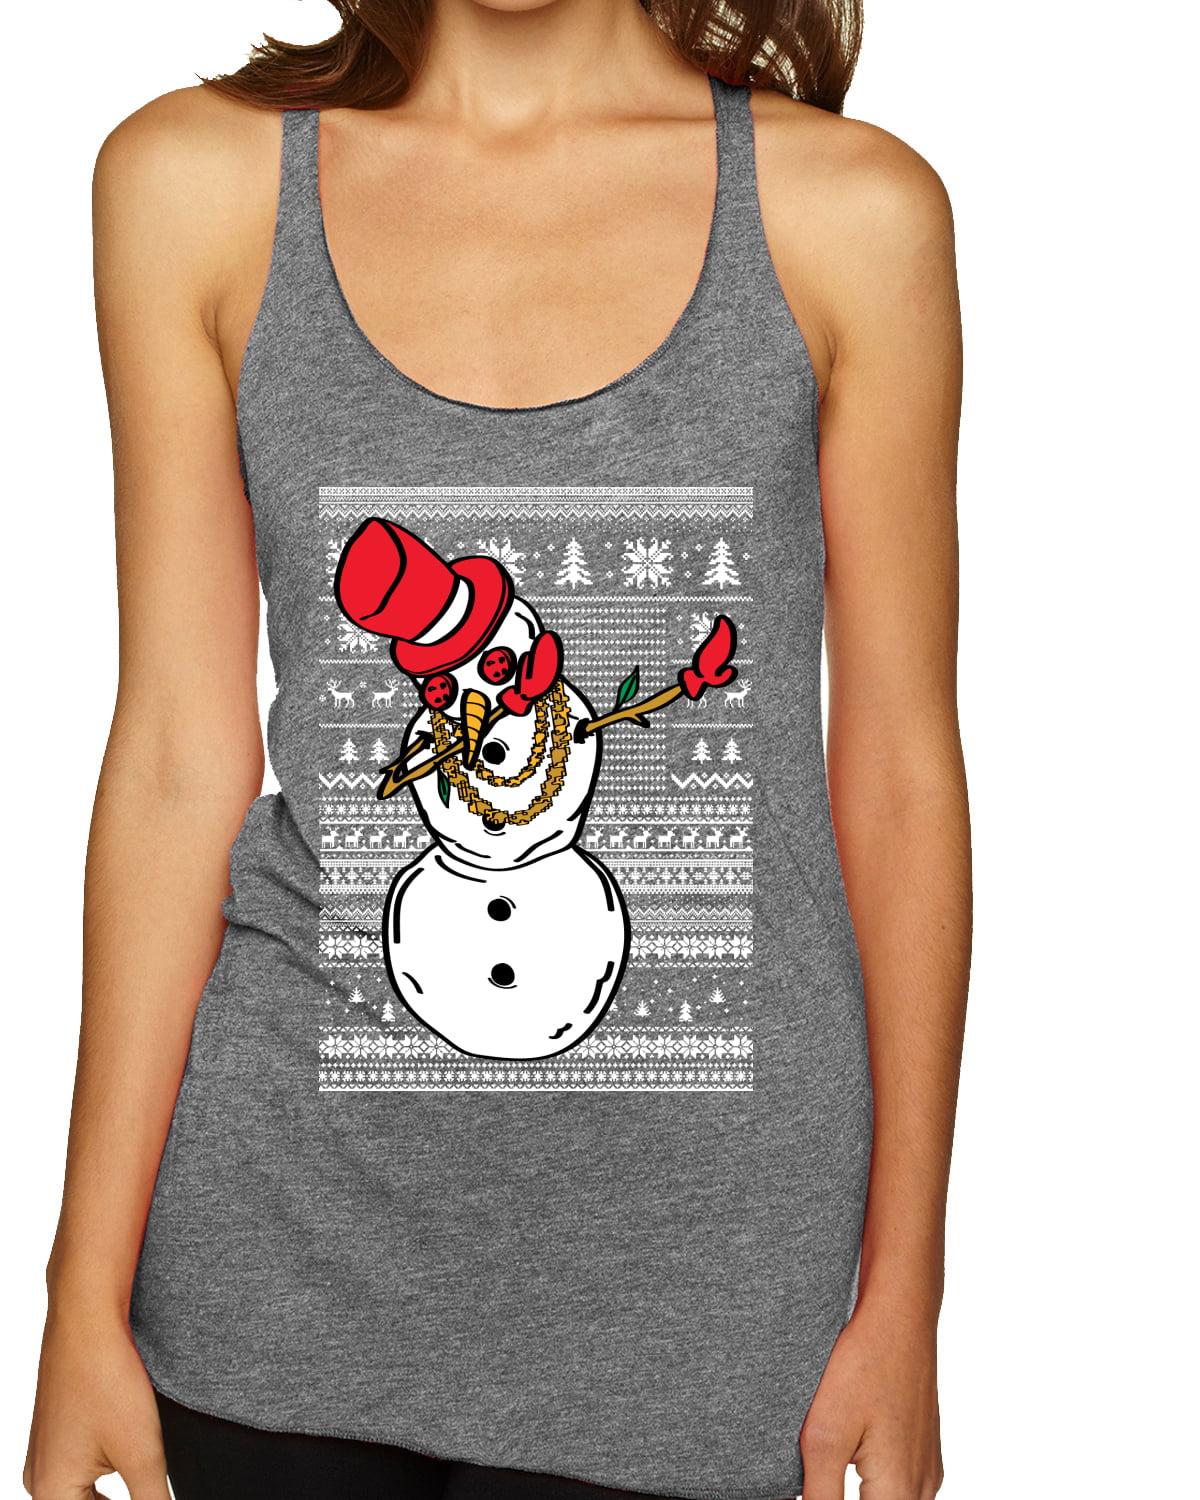 Snowmen Stick Up Tank Top Funny Holiday Christmas Xmas Hair Dryer Sleeveless